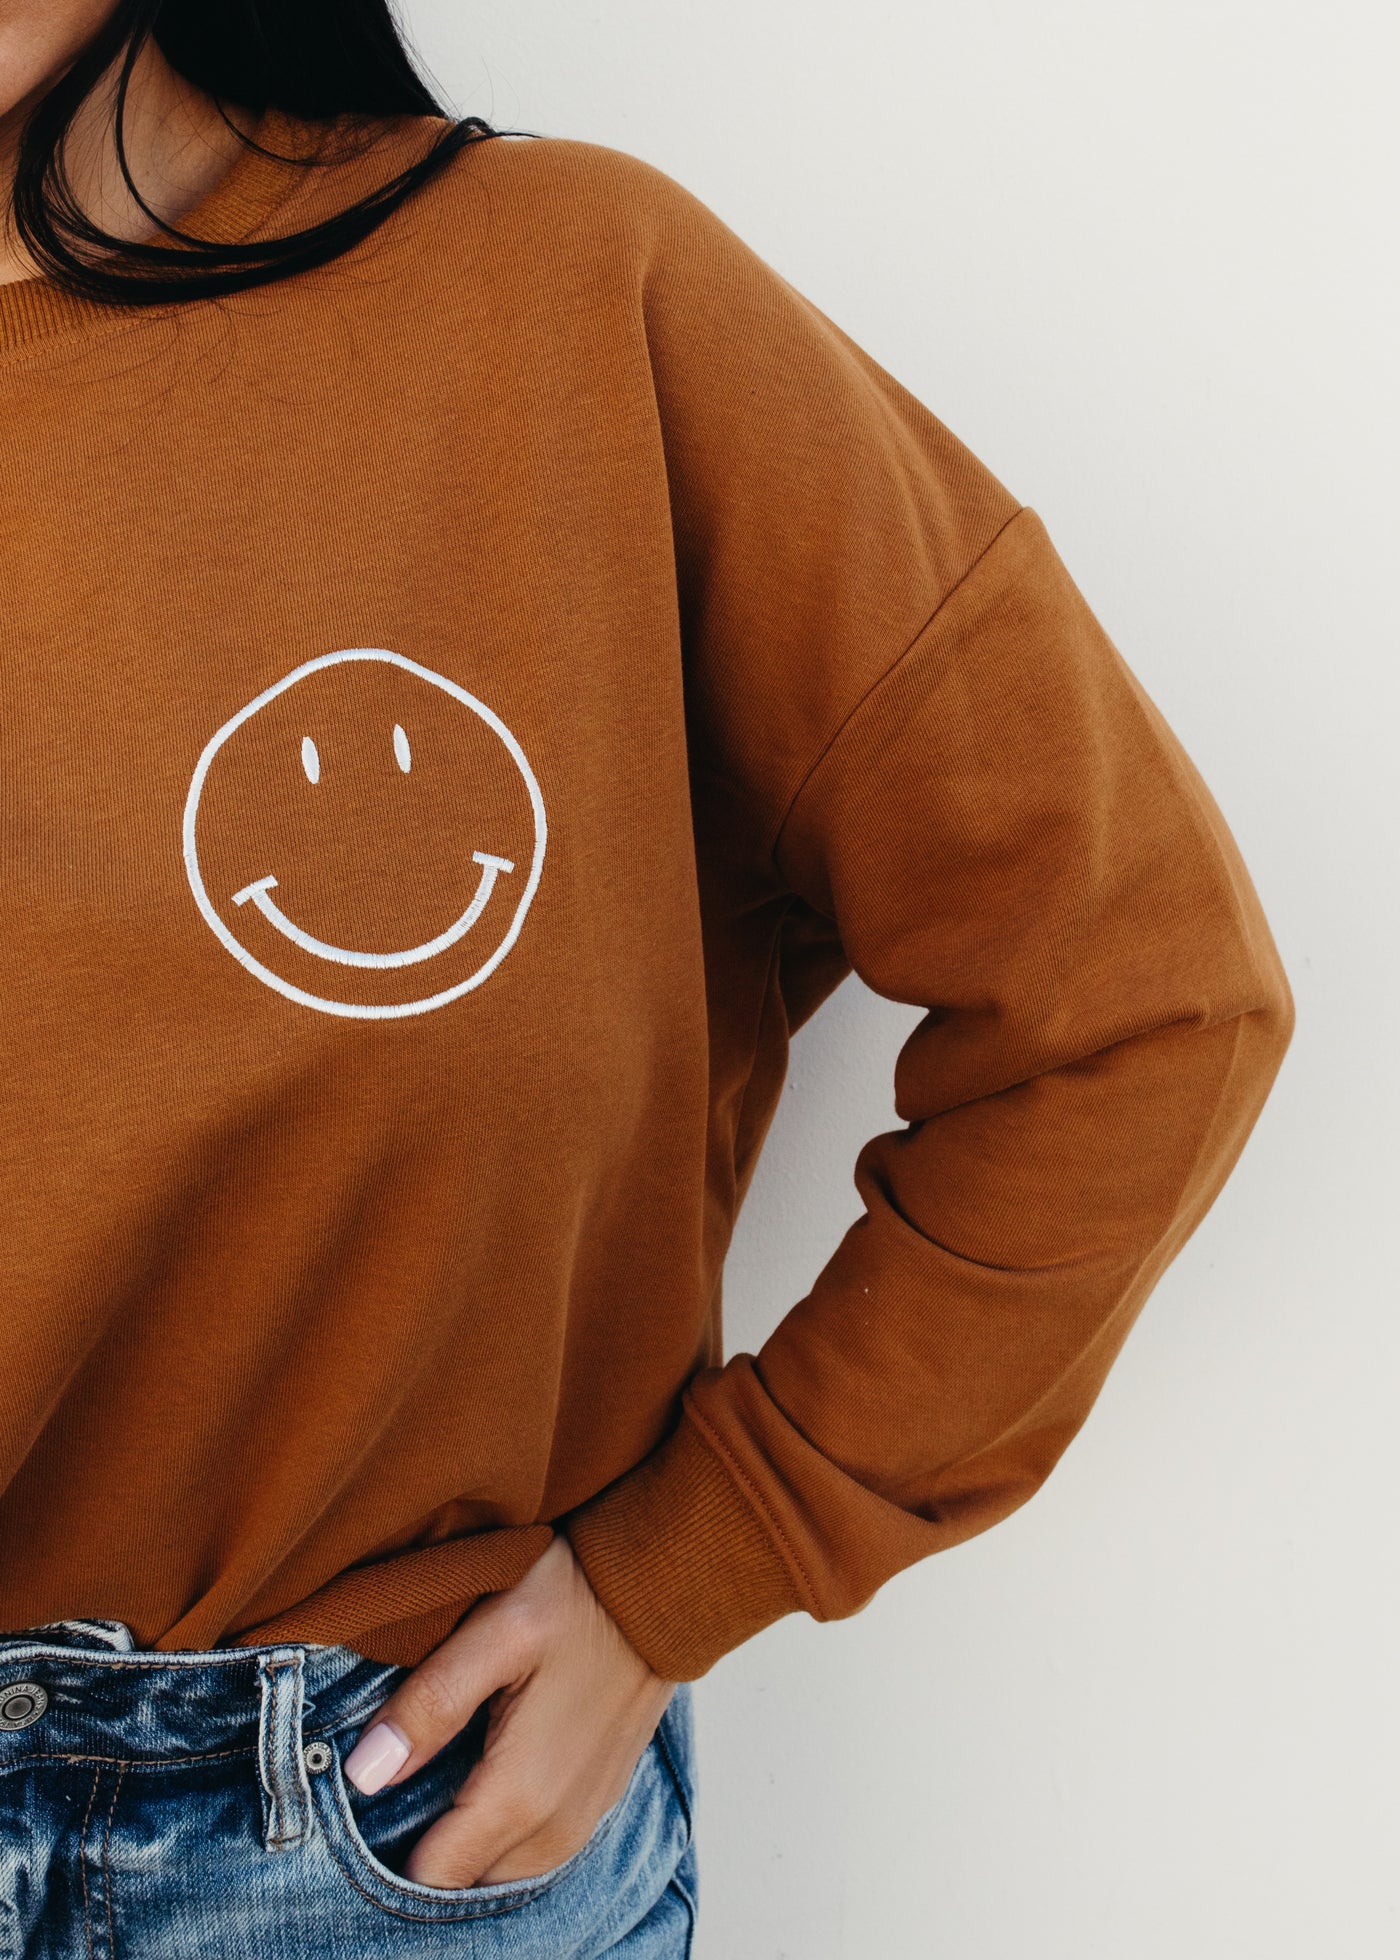 Happy & You Know It  - Smiley Face Sweatshirt